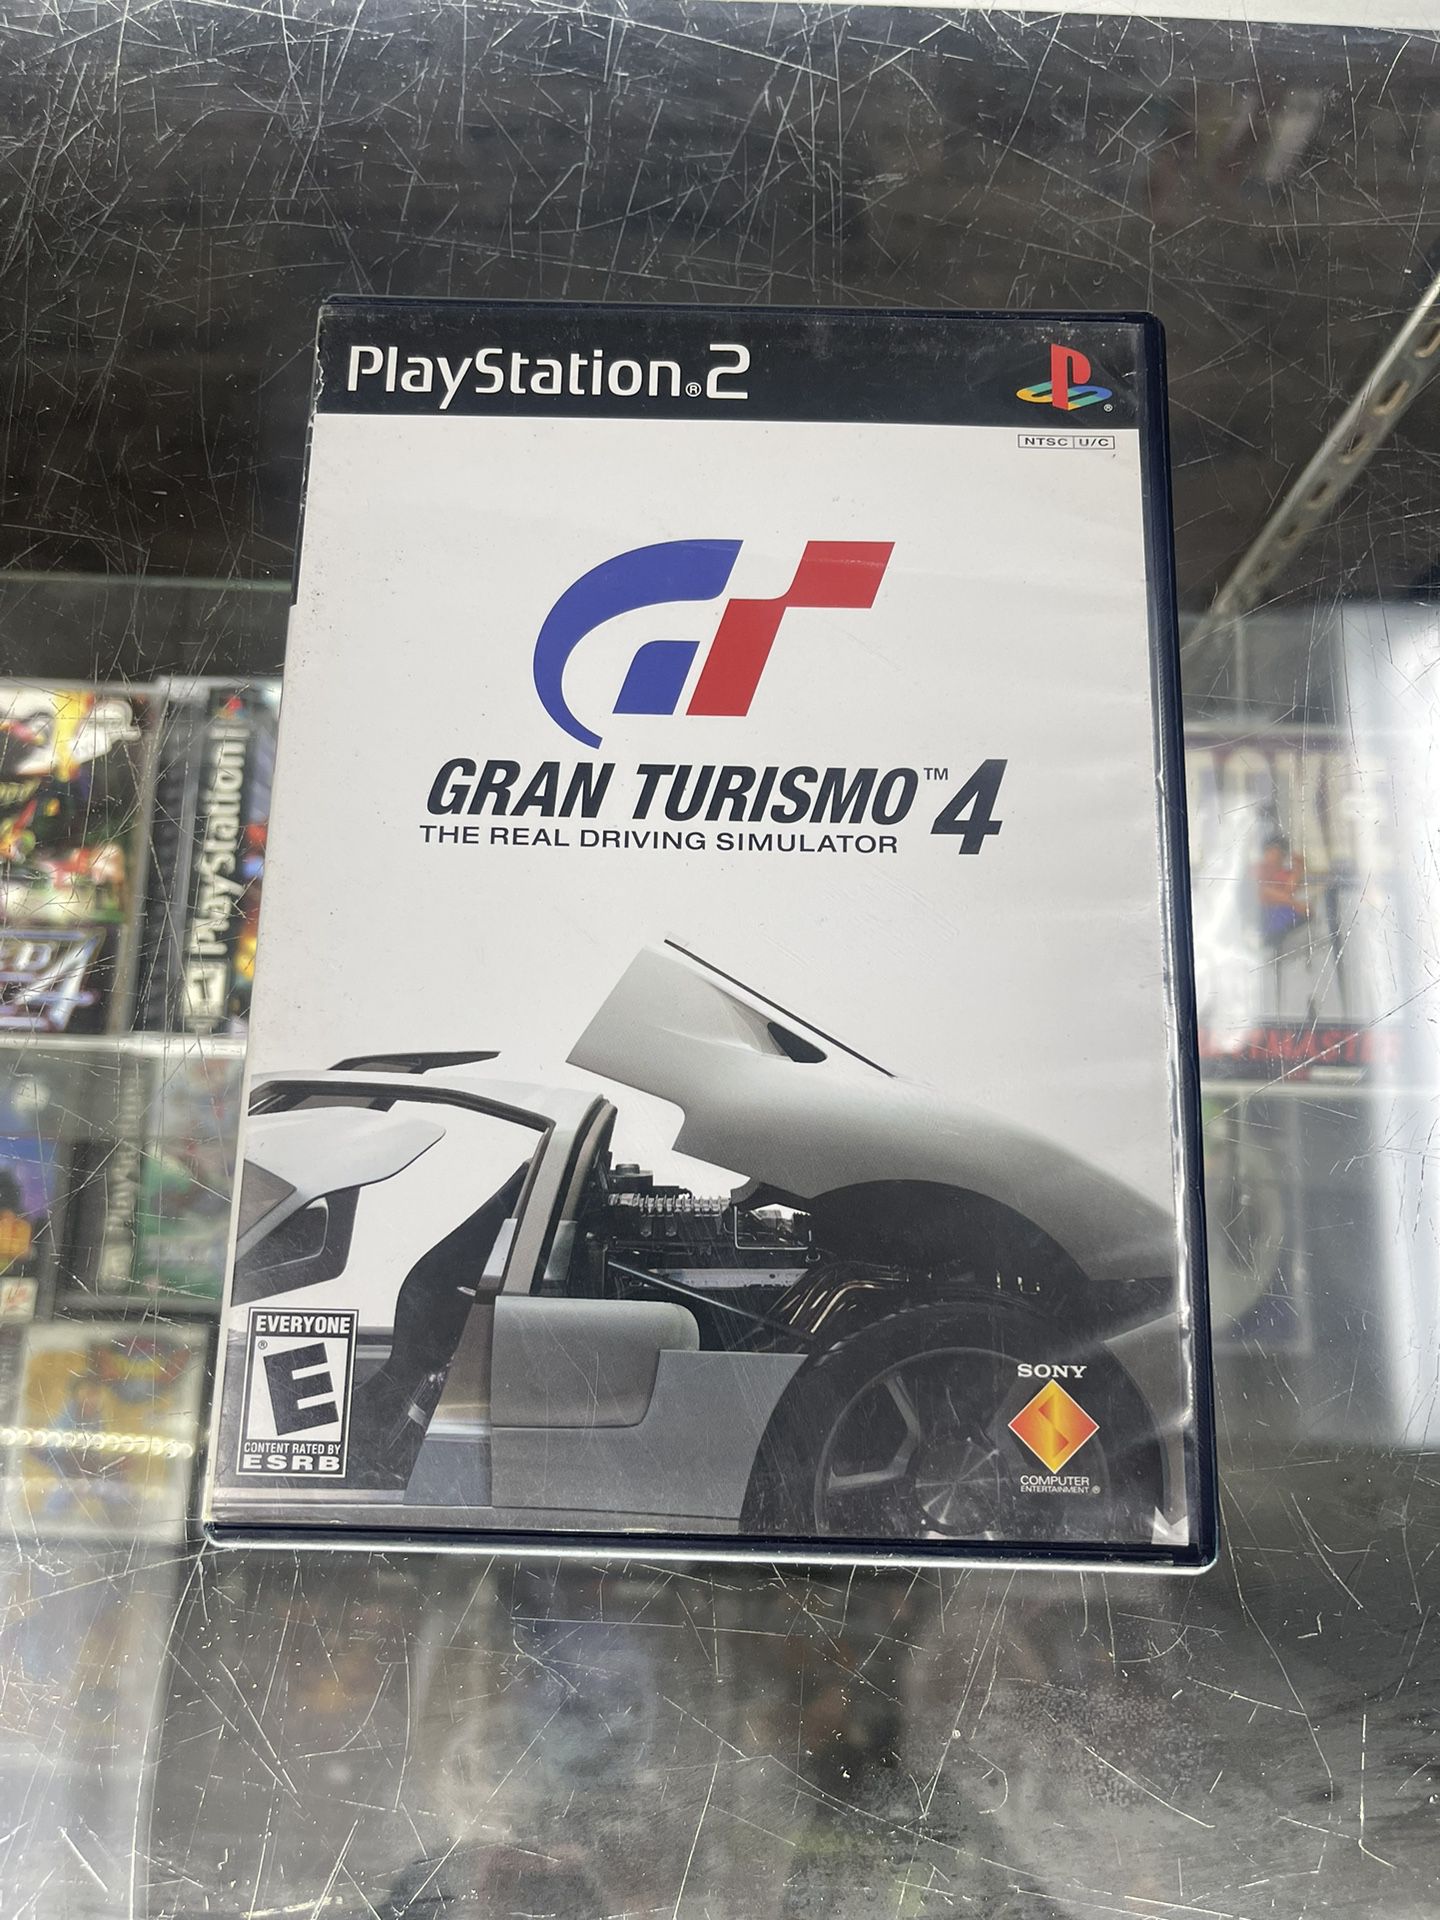 Gran Turismo 4 Ps2 $20 Gamehogs 11am-7pm